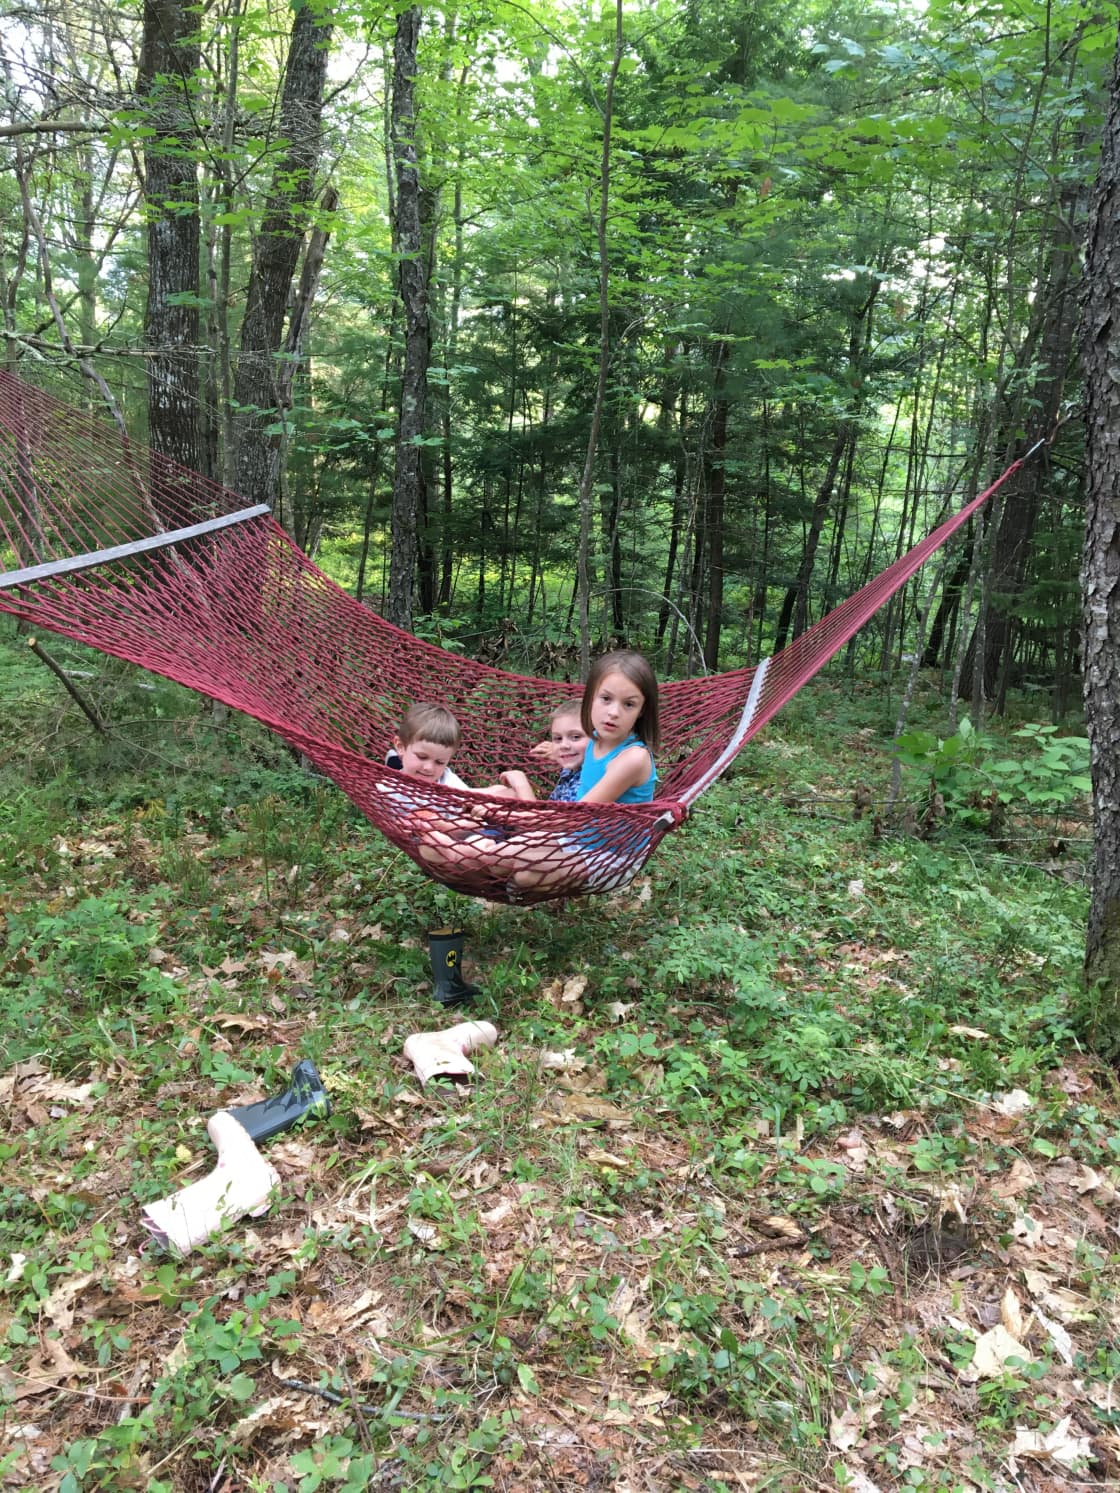 Grandchildren of Campkeeper enjoying the hammock on family camping weekend. 